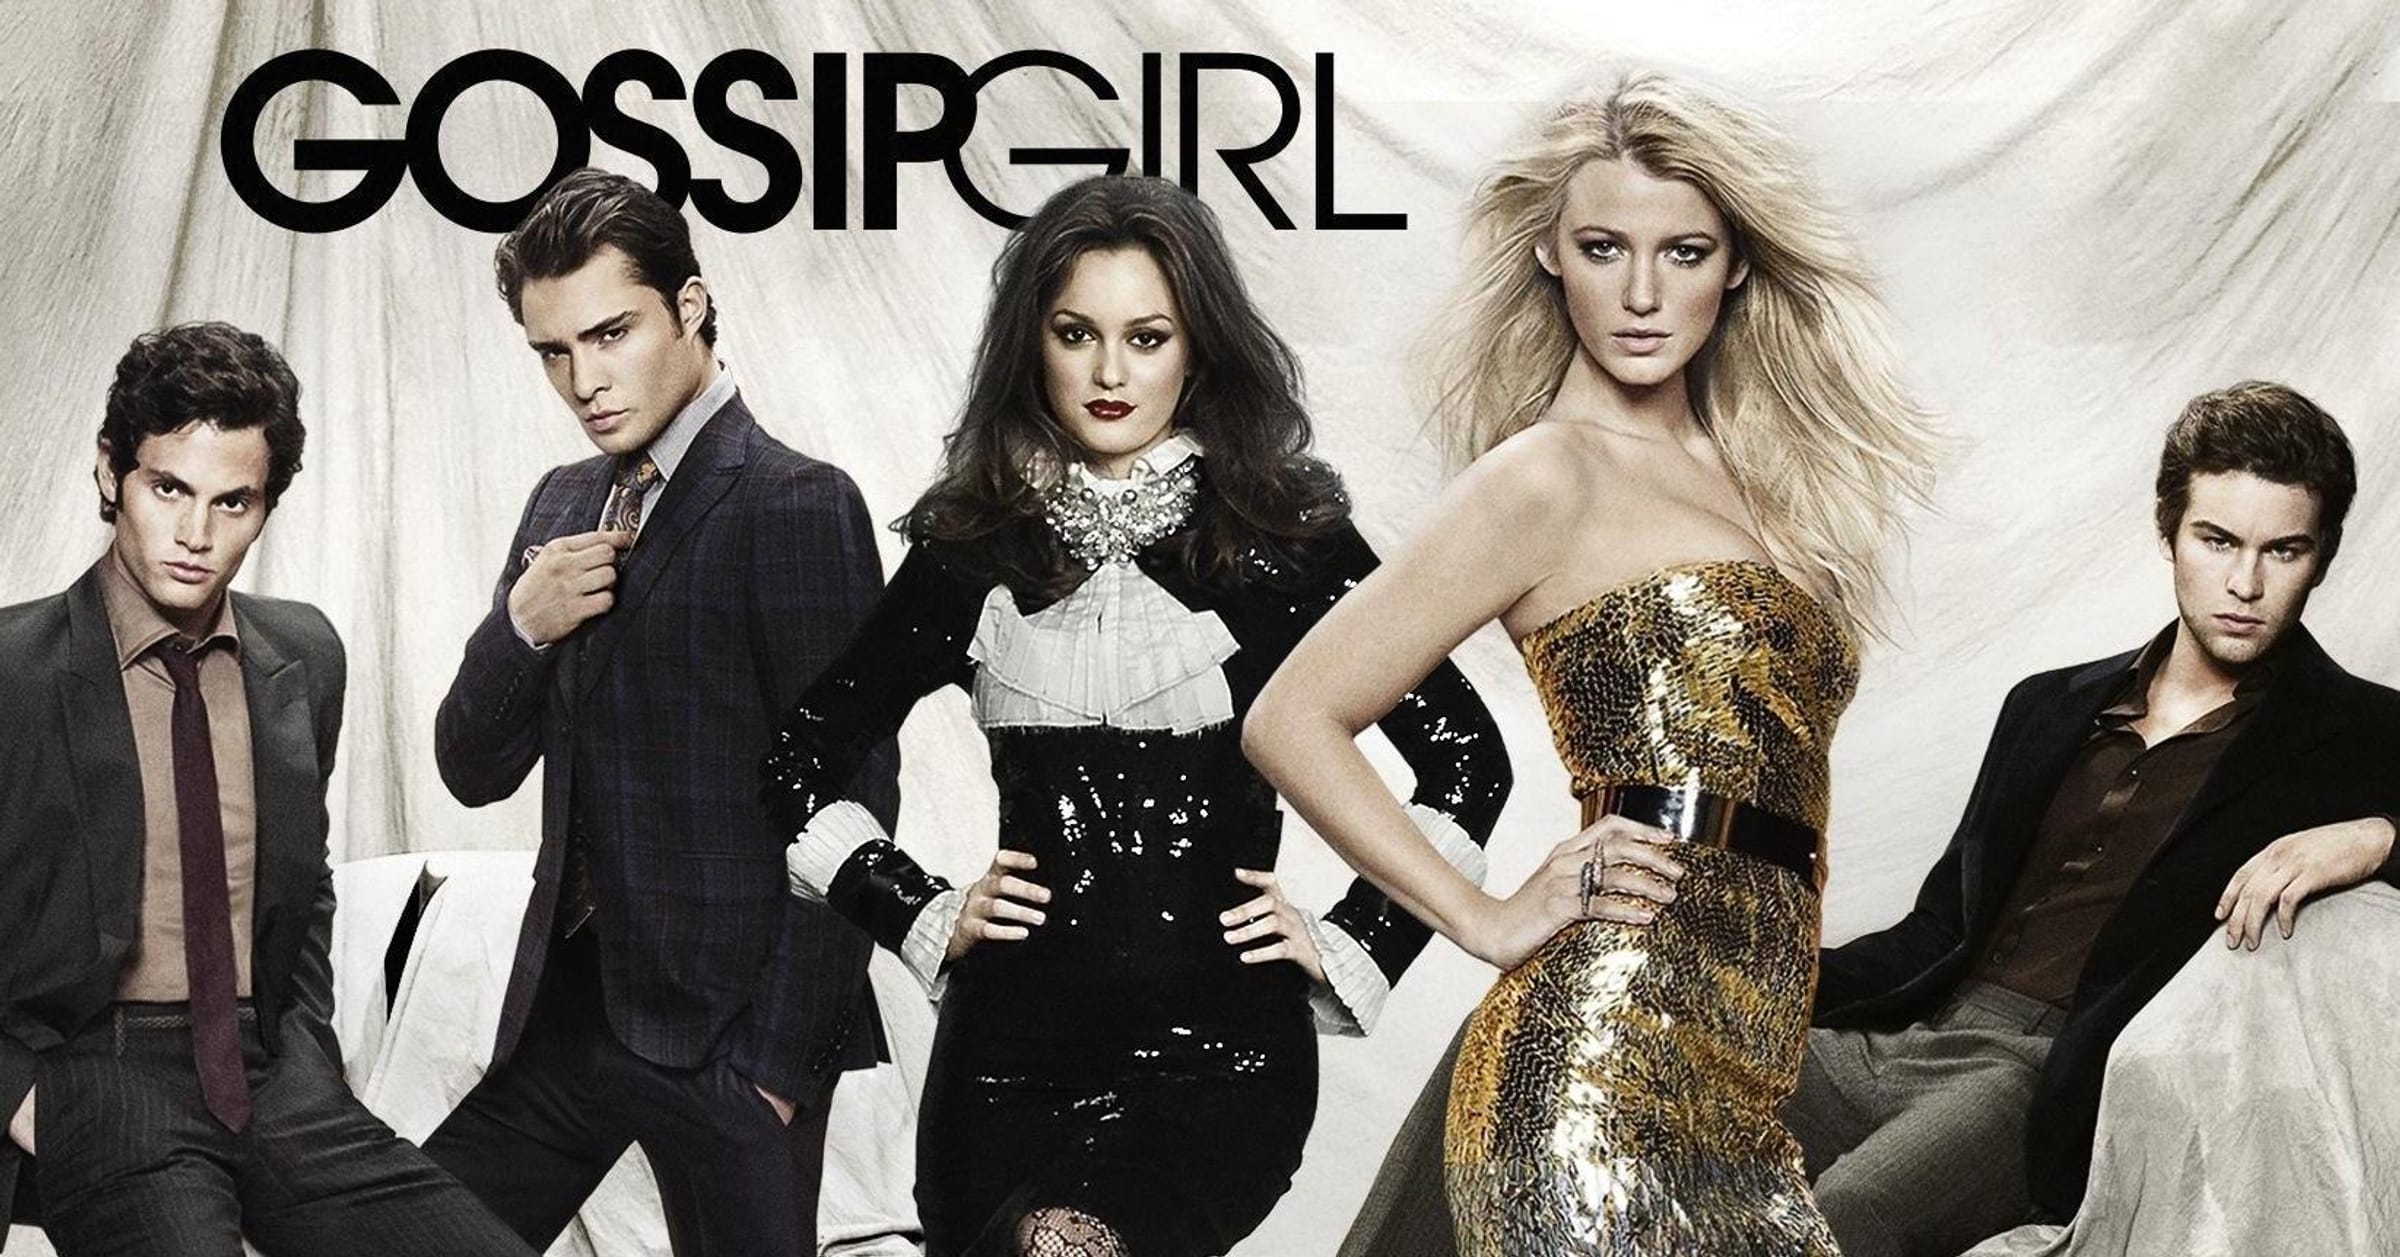 Gossip Girl: Season 1